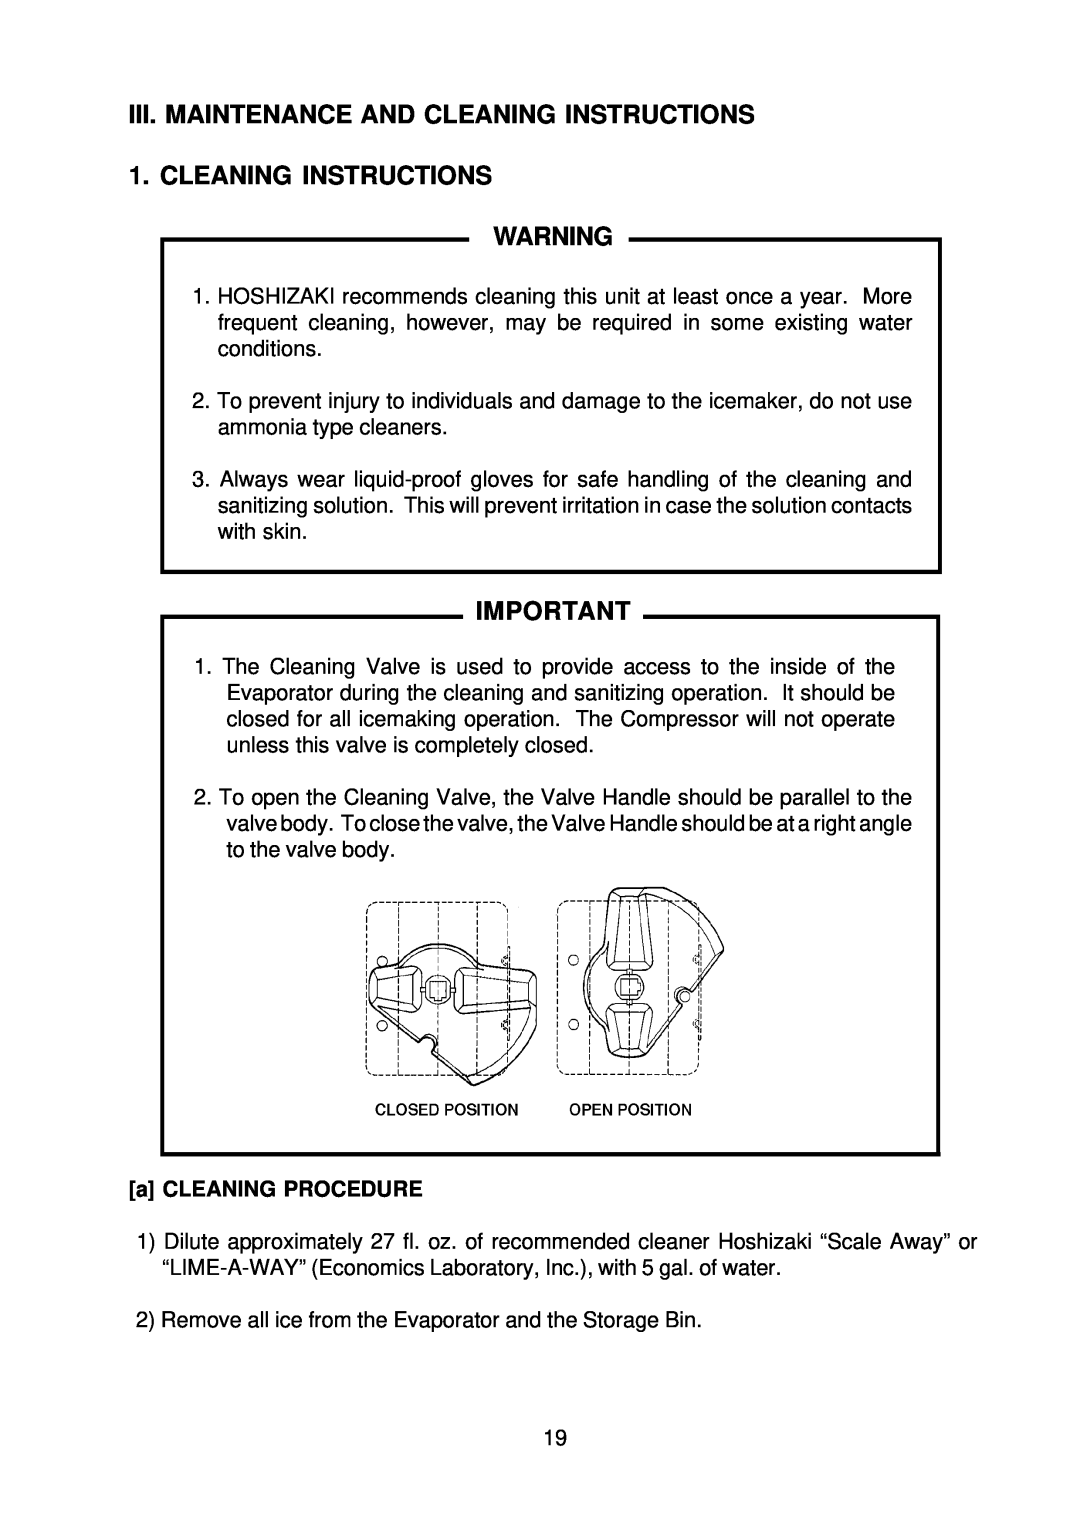 Hoshizaki KM-1300NRF instruction manual aCLEANING PROCEDURE 